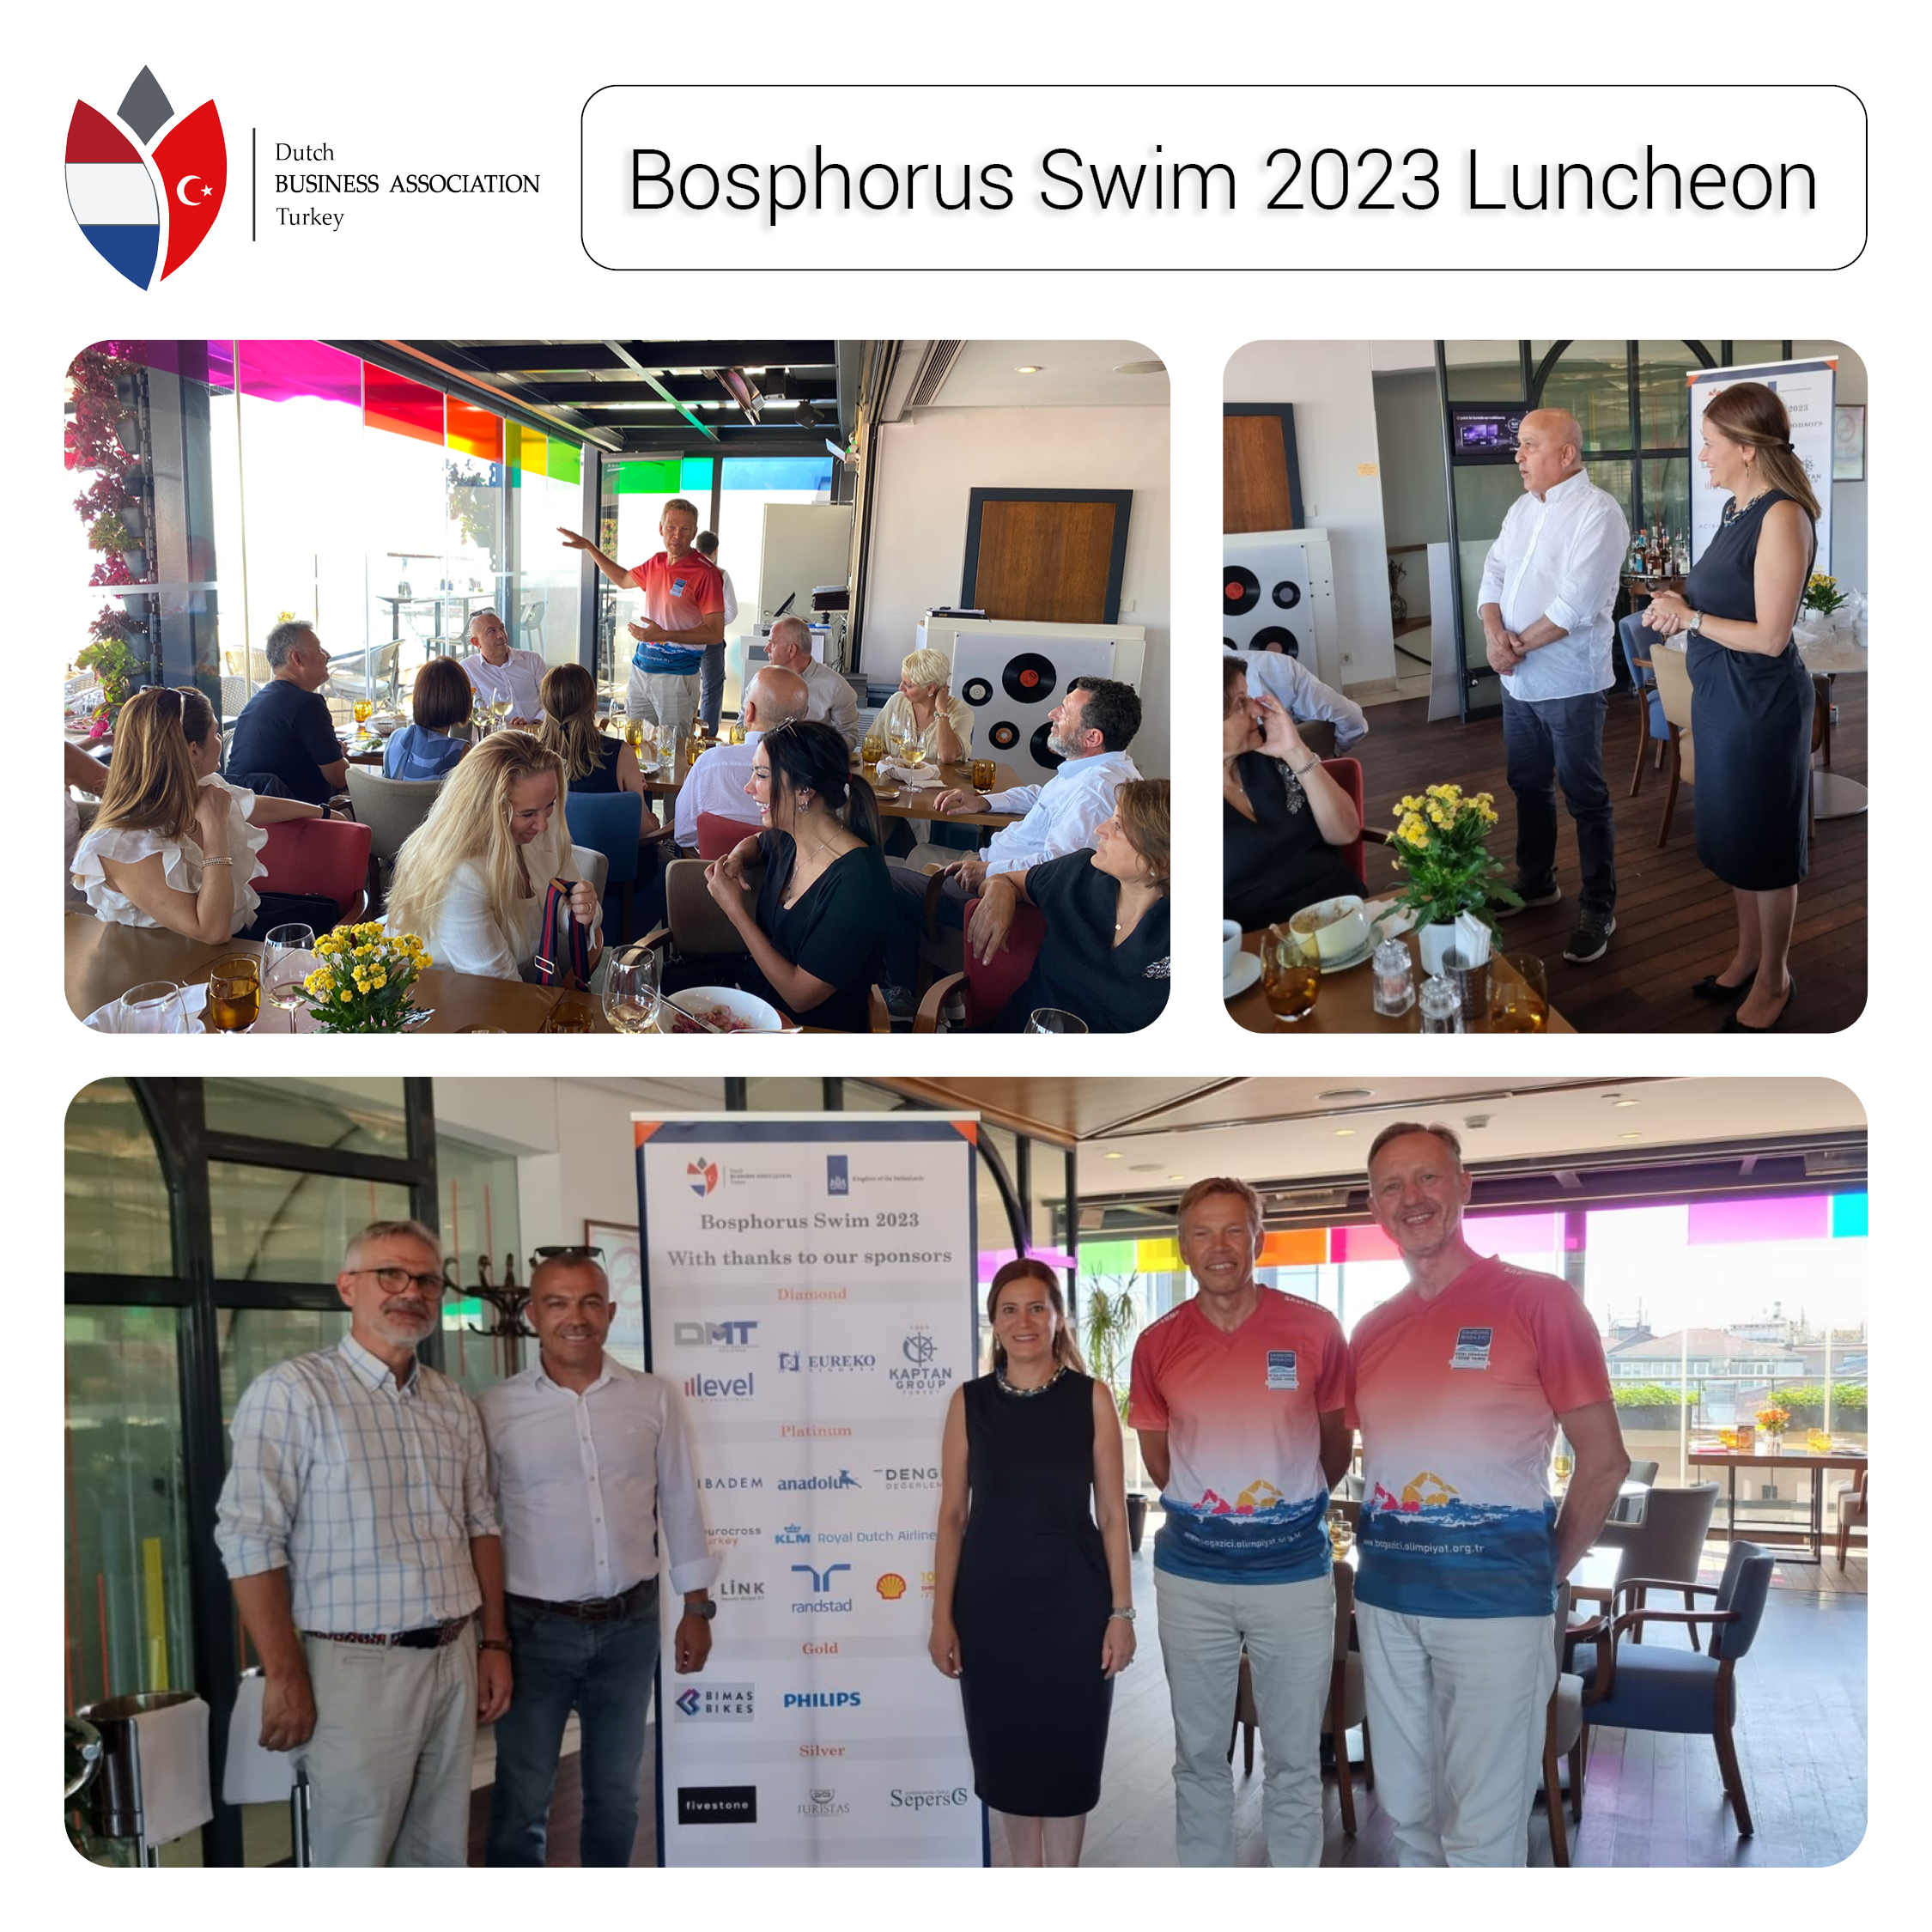 Bosphorus Swim 2023 Luncheon 2